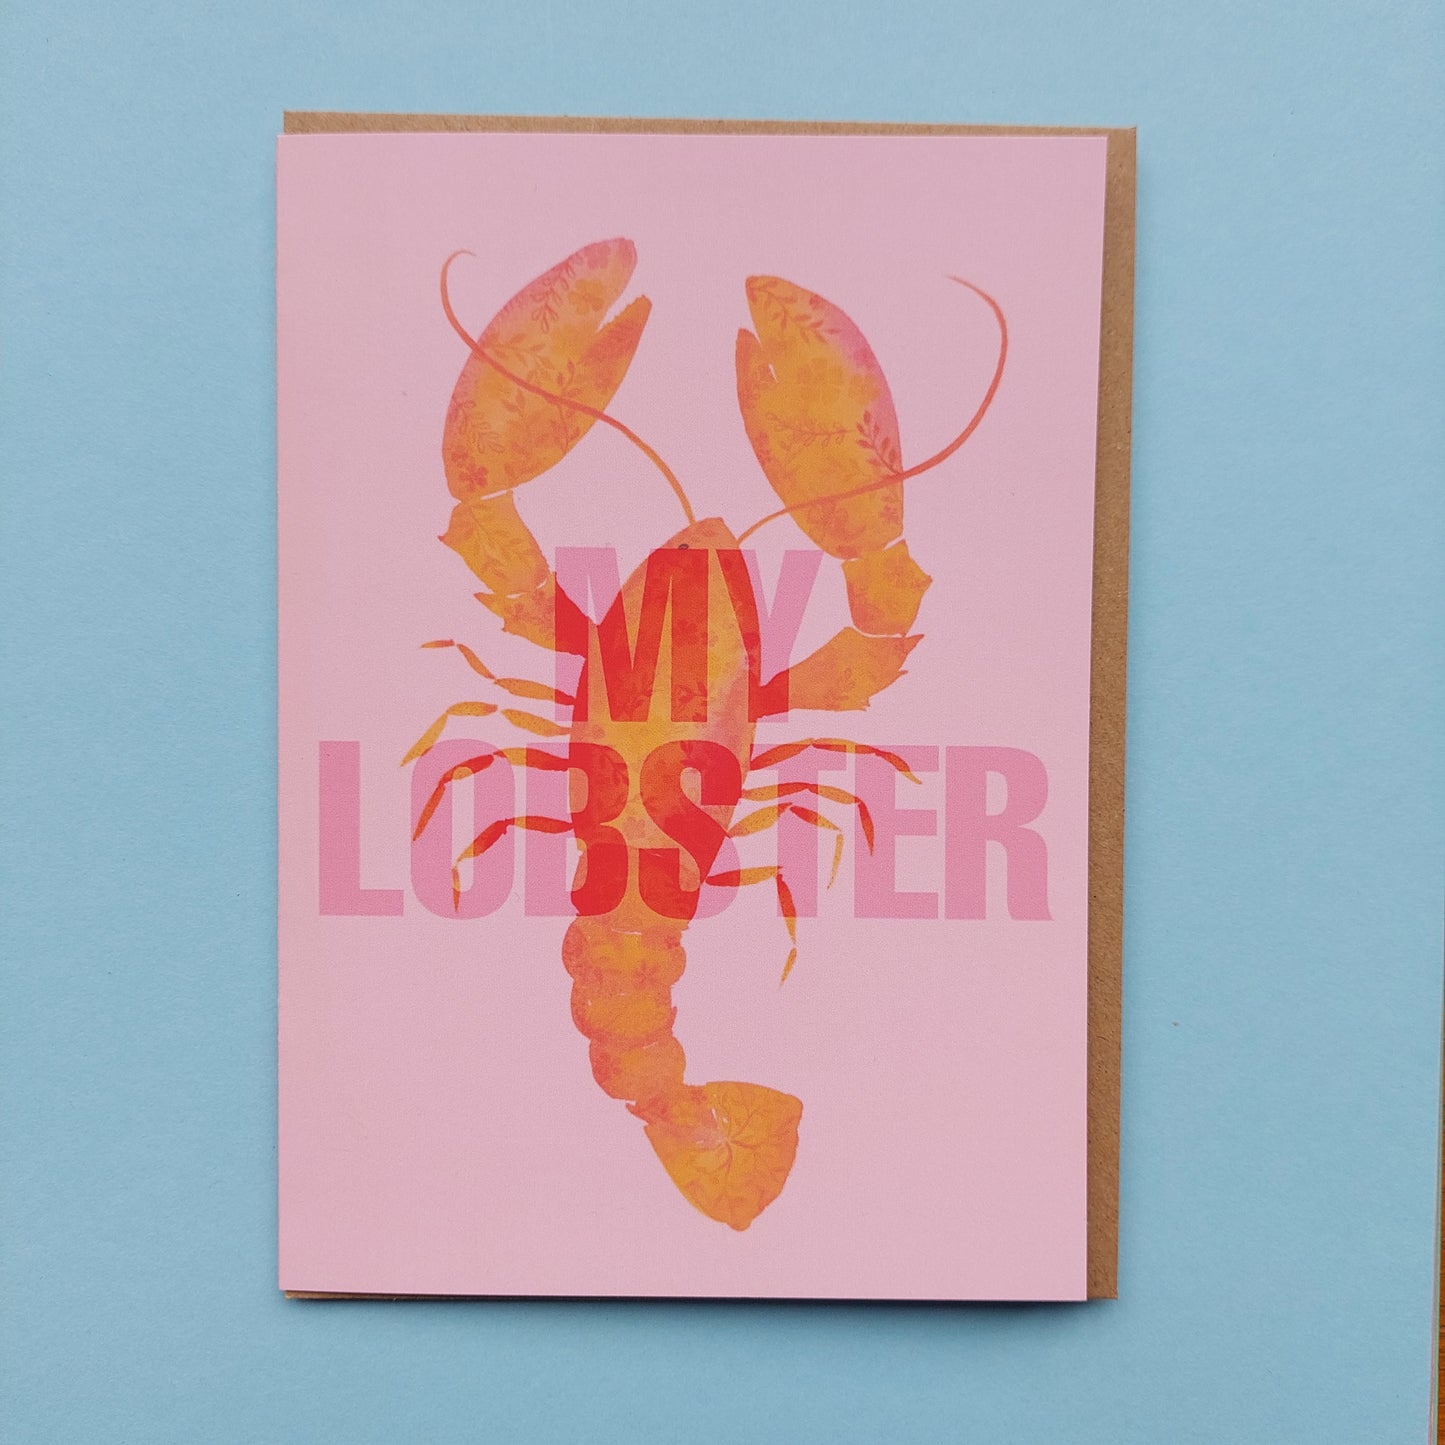 My Lobster Card